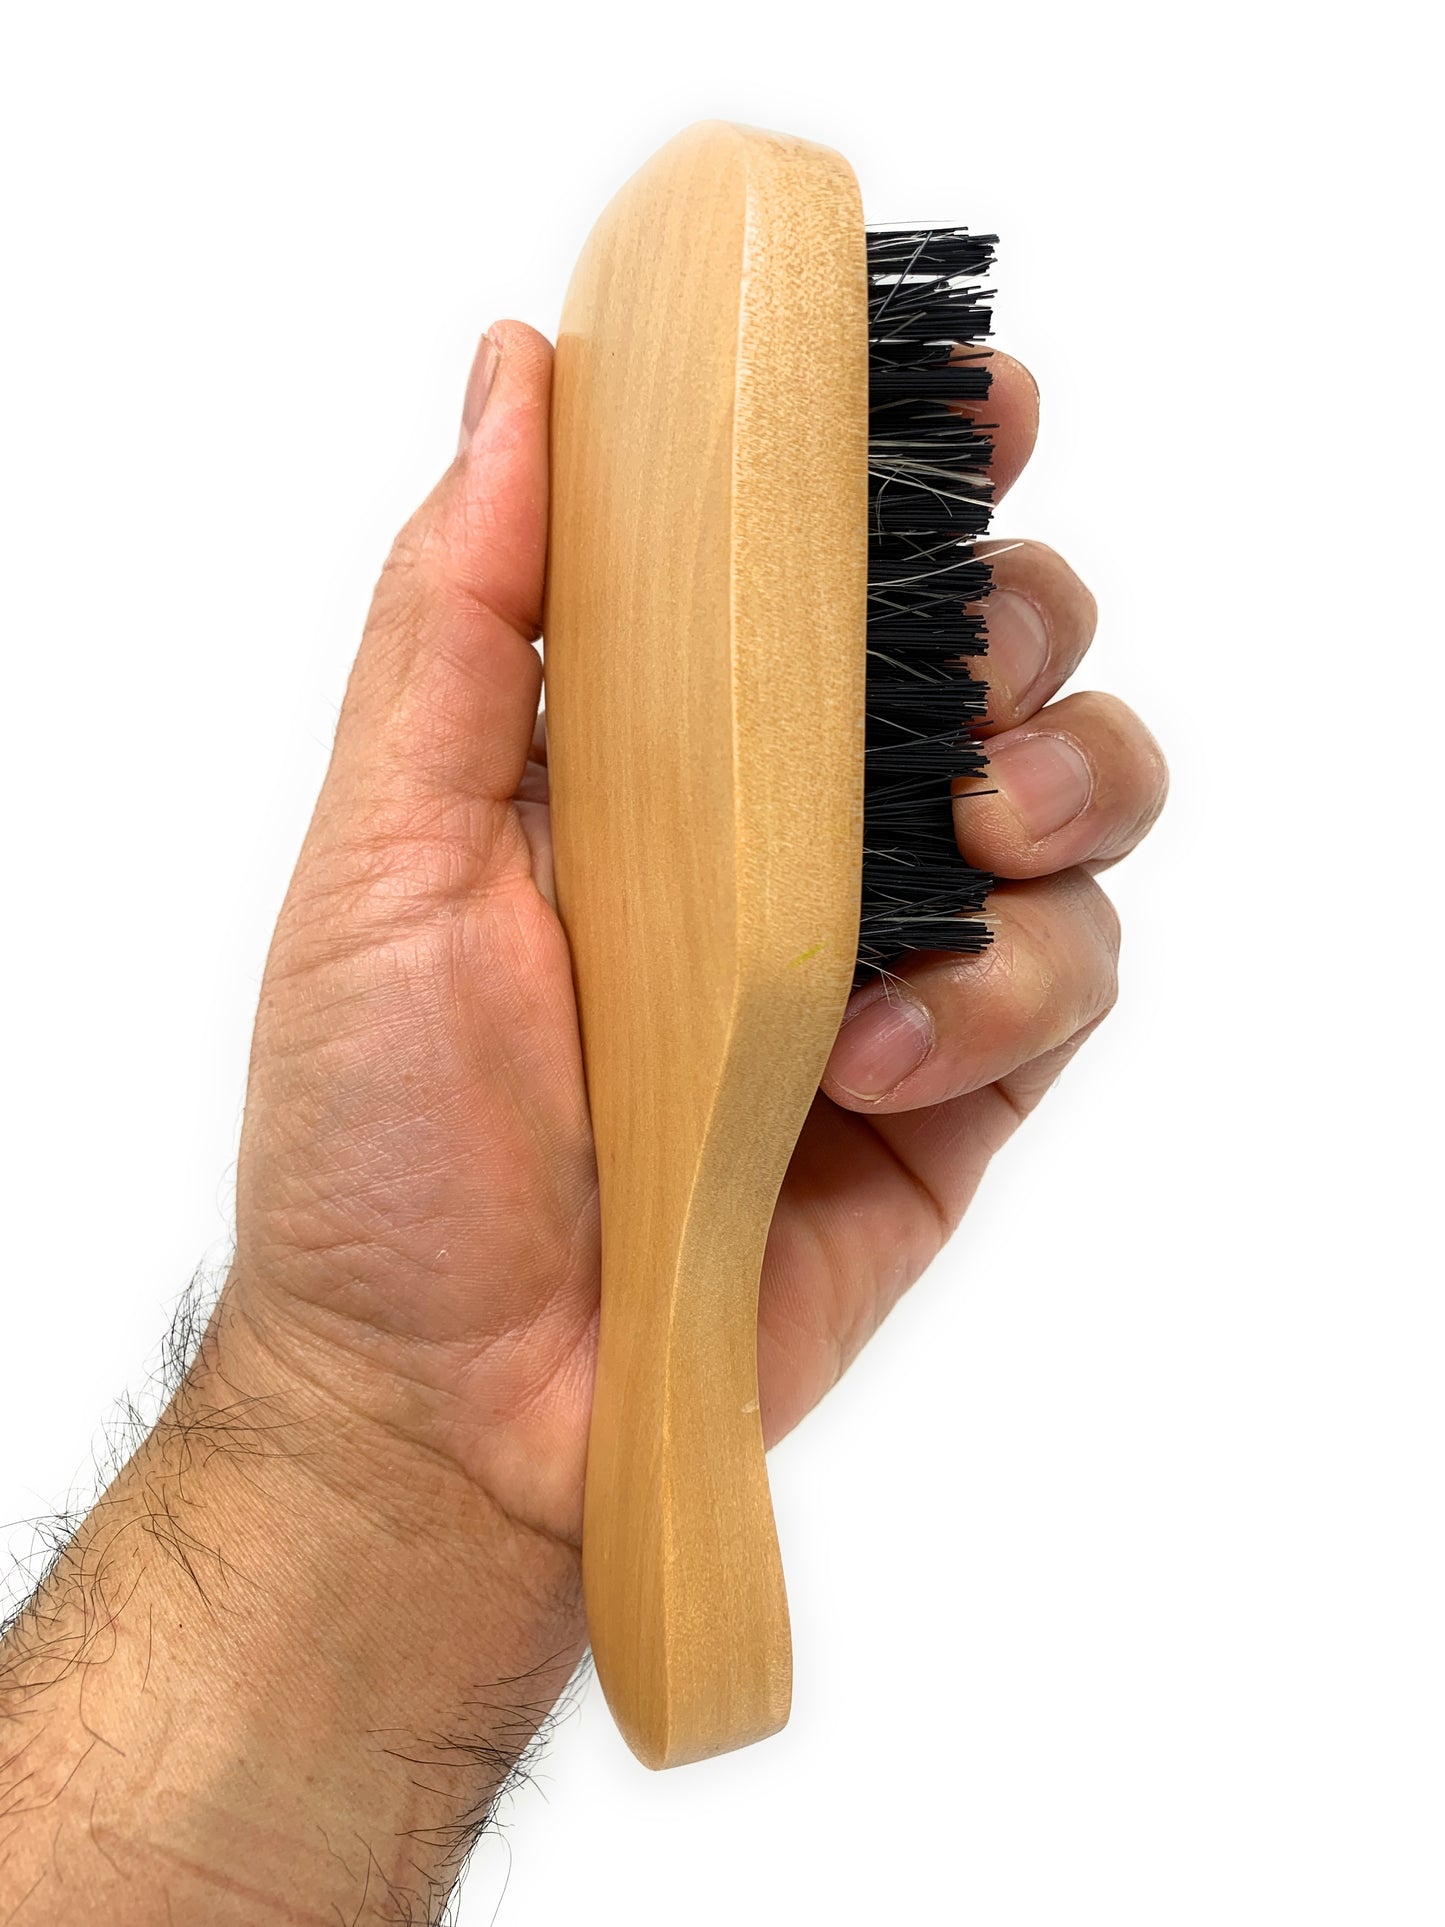 Scalpmaster Oval Palm Brush